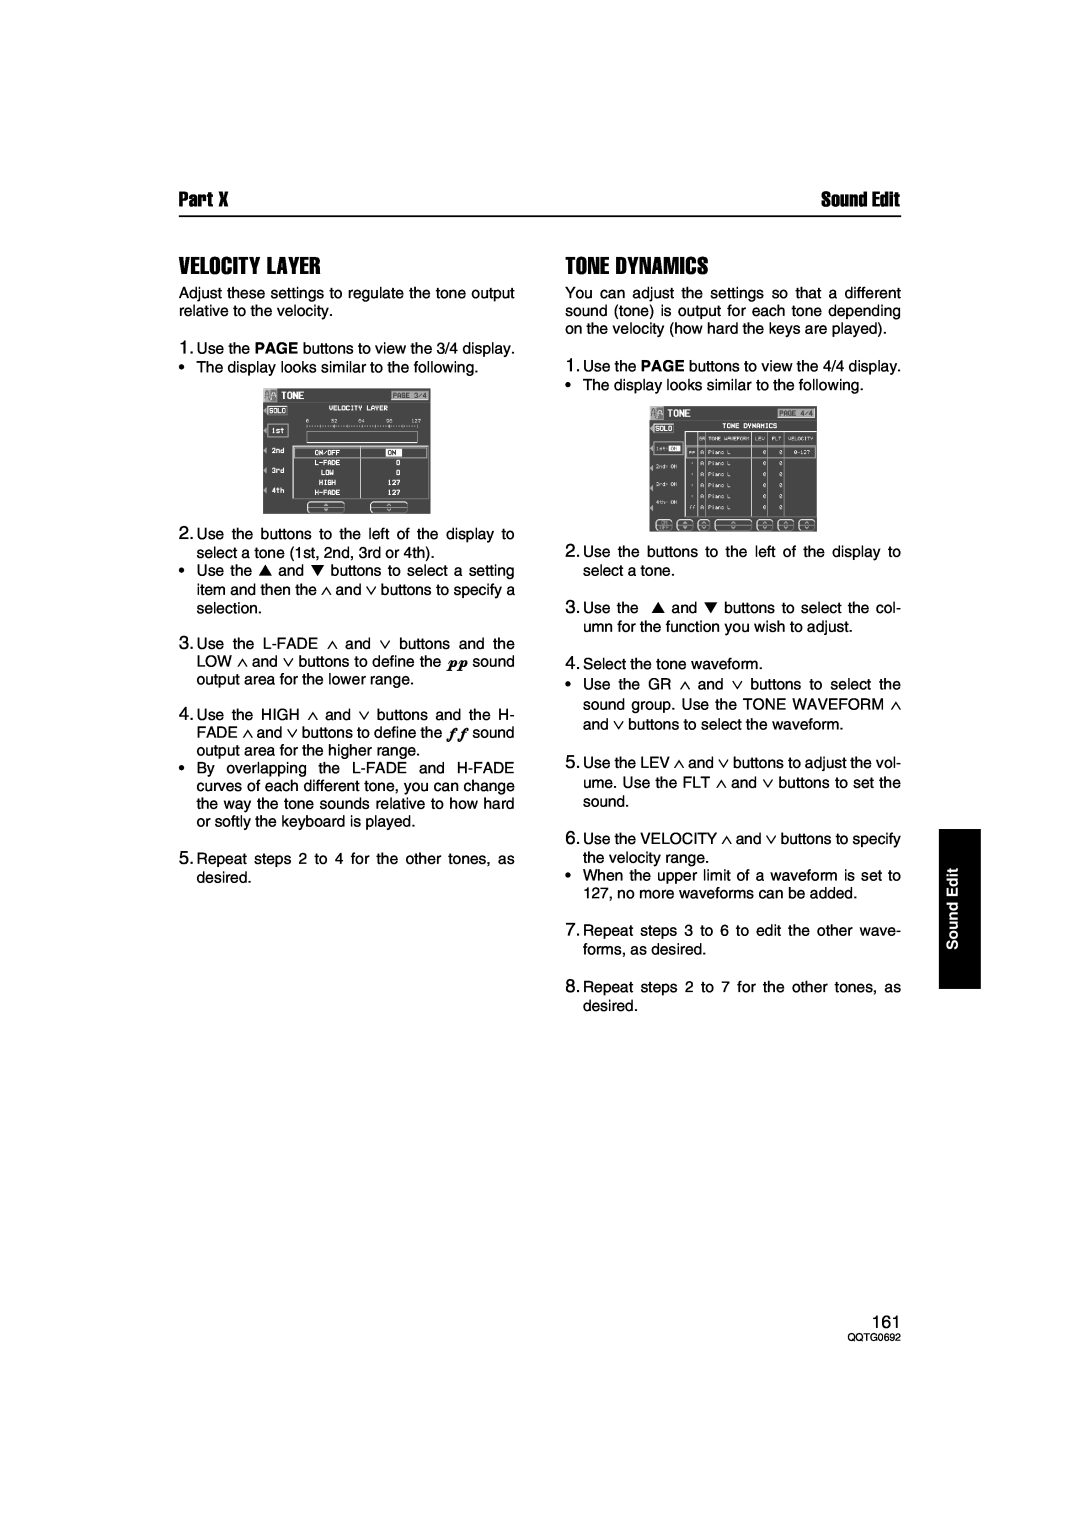 Panasonic SX-KN2400, SX-KN2600 manual Velocity Layer, Tone Dynamics, Part, Sound Edit 